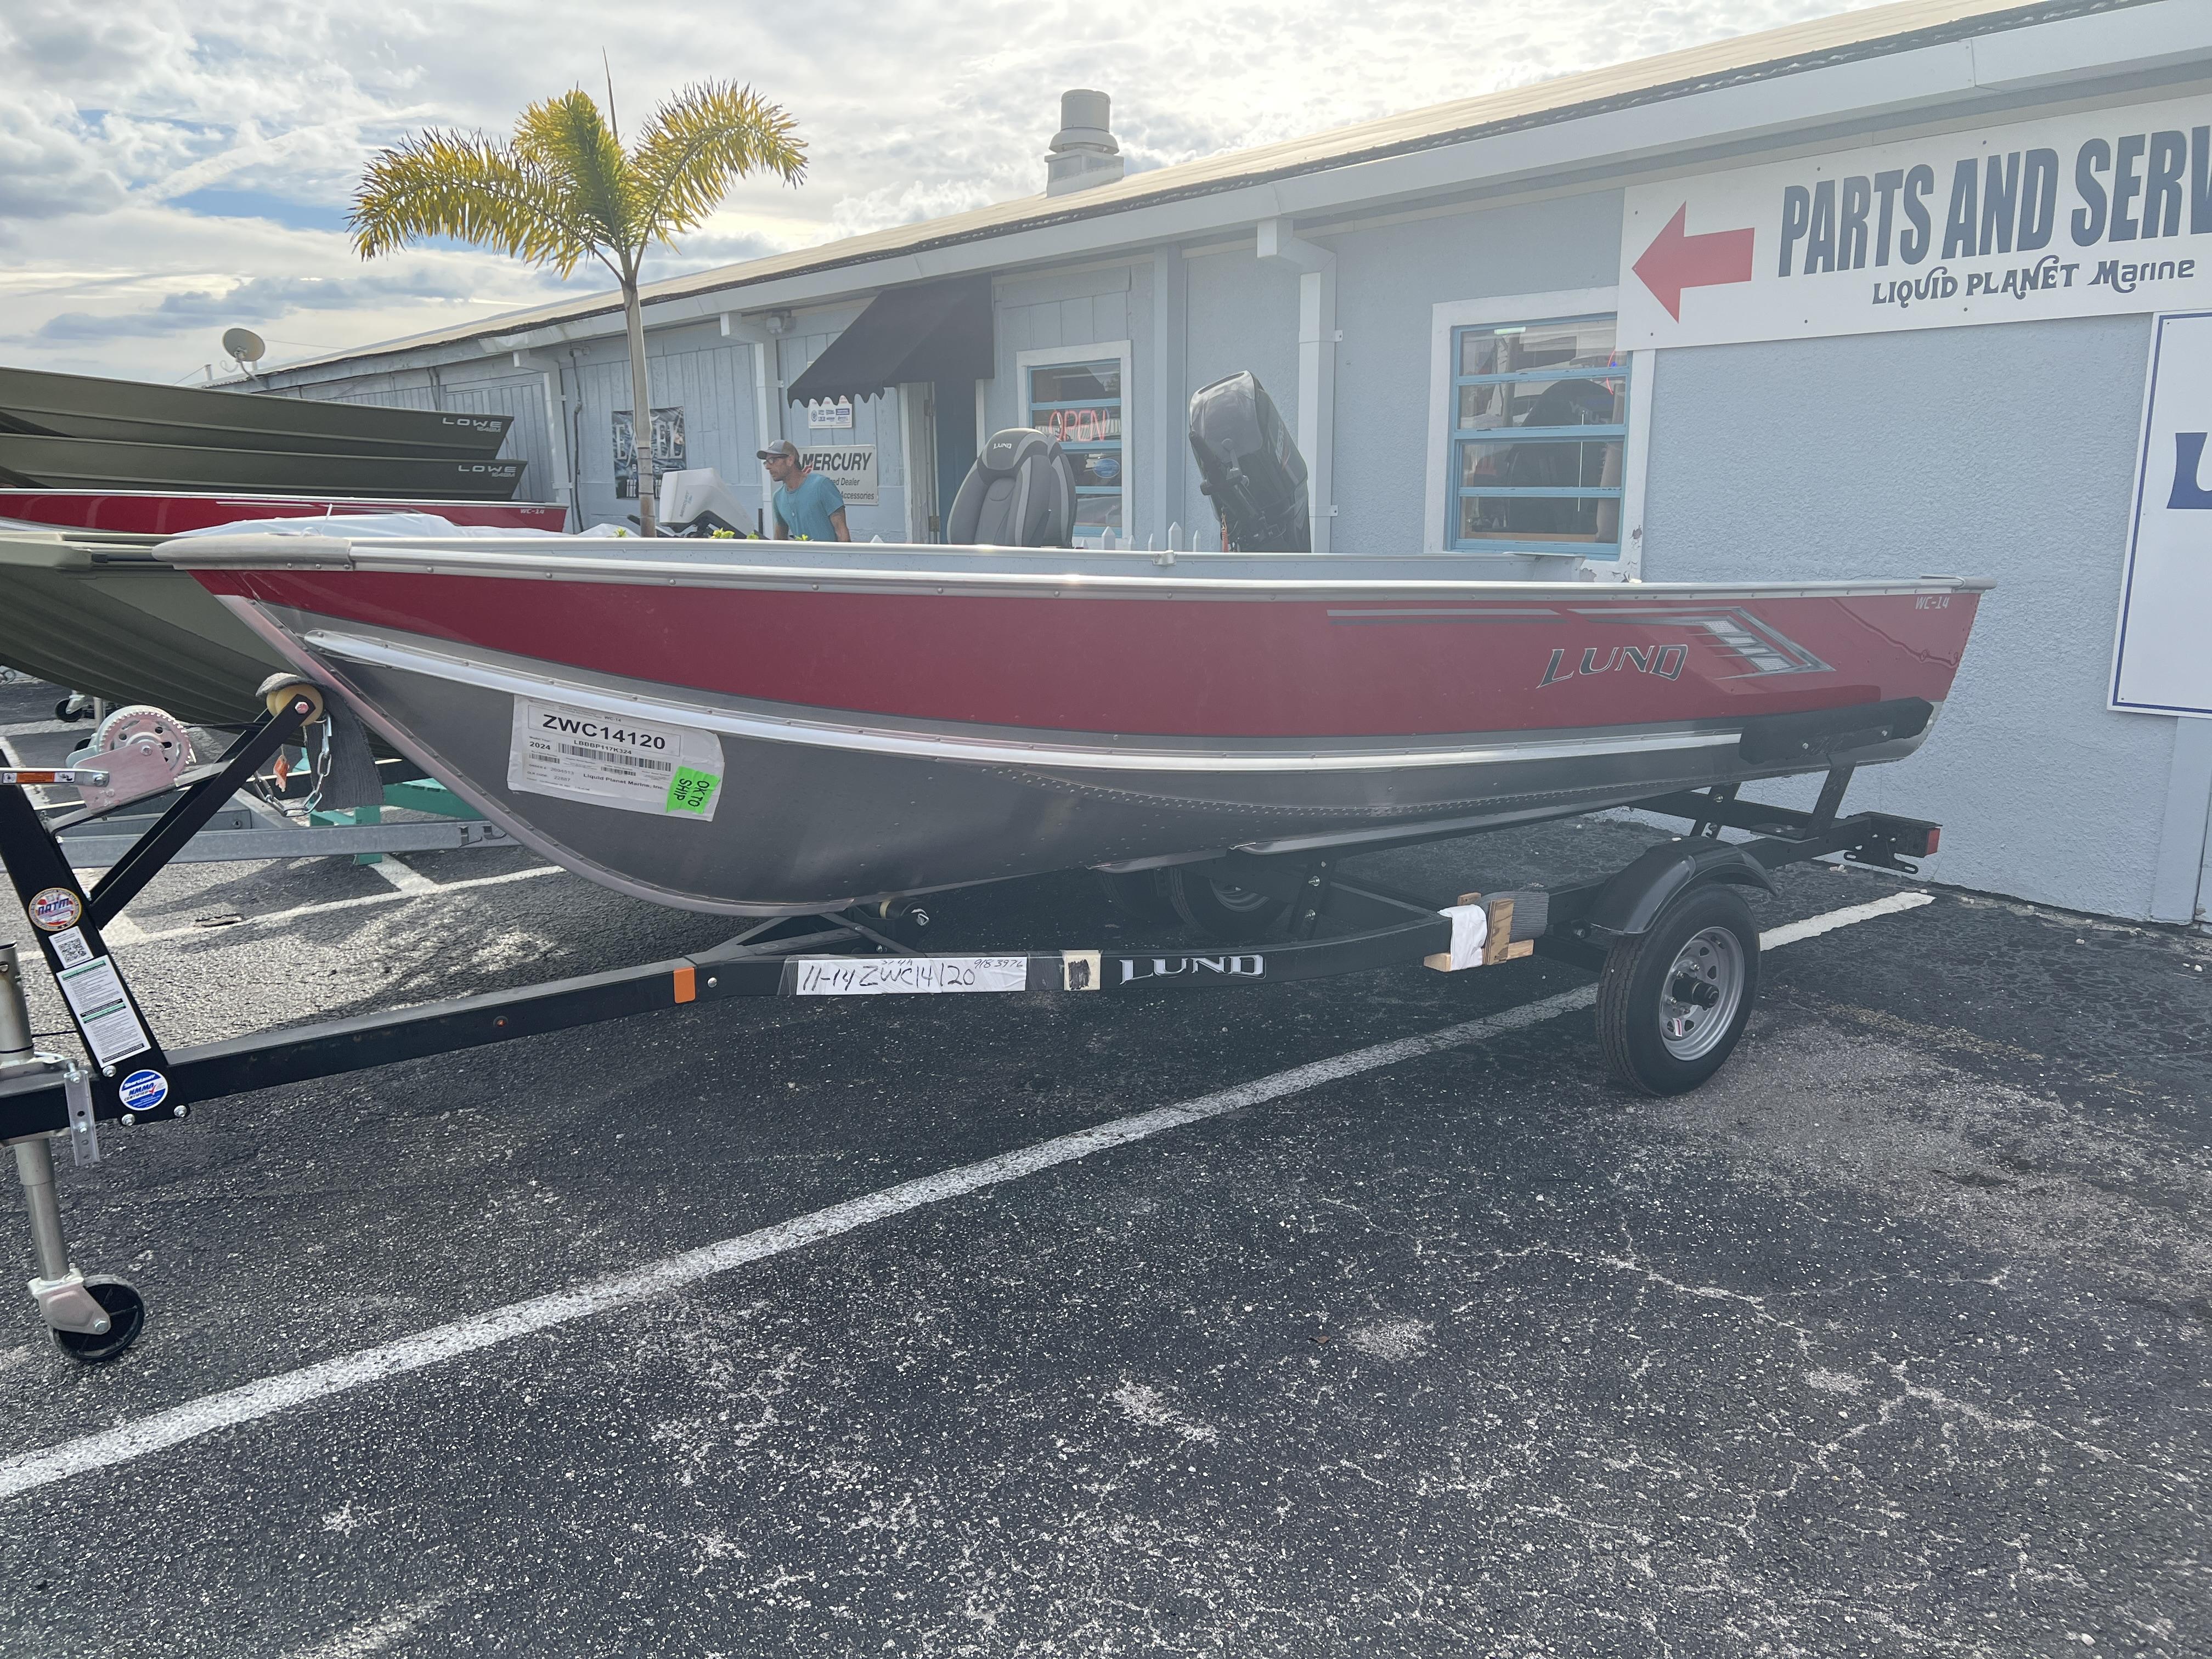 $1500 - 14' Valco boat, trailer, - Strip Pit Bait & Tackle